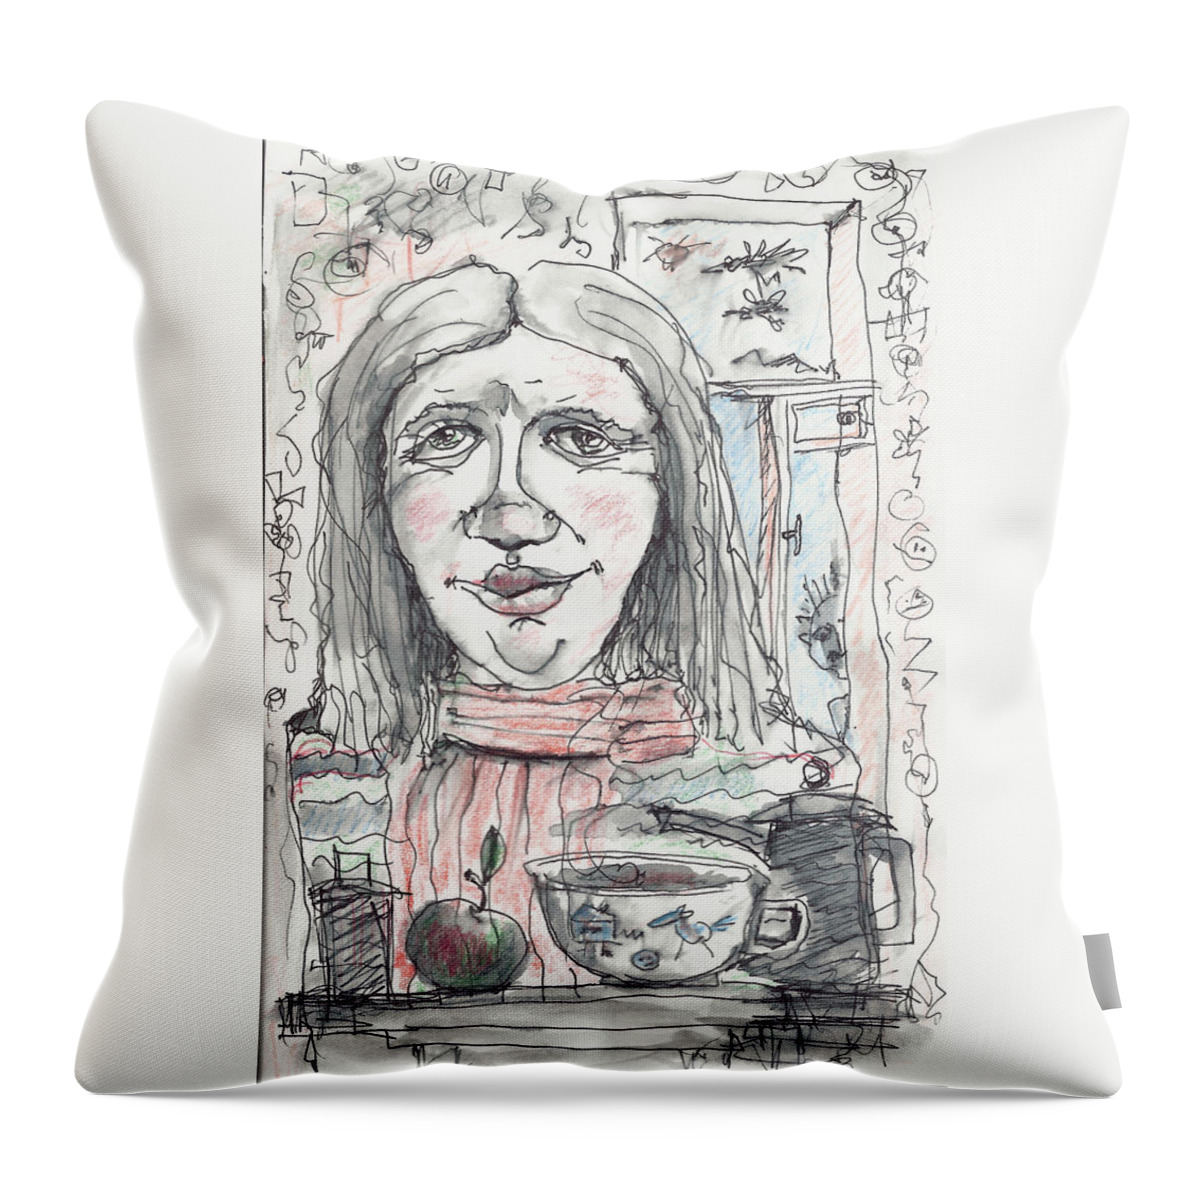 Fun Throw Pillow featuring the painting Tea time 6 by Maxim Komissarchik